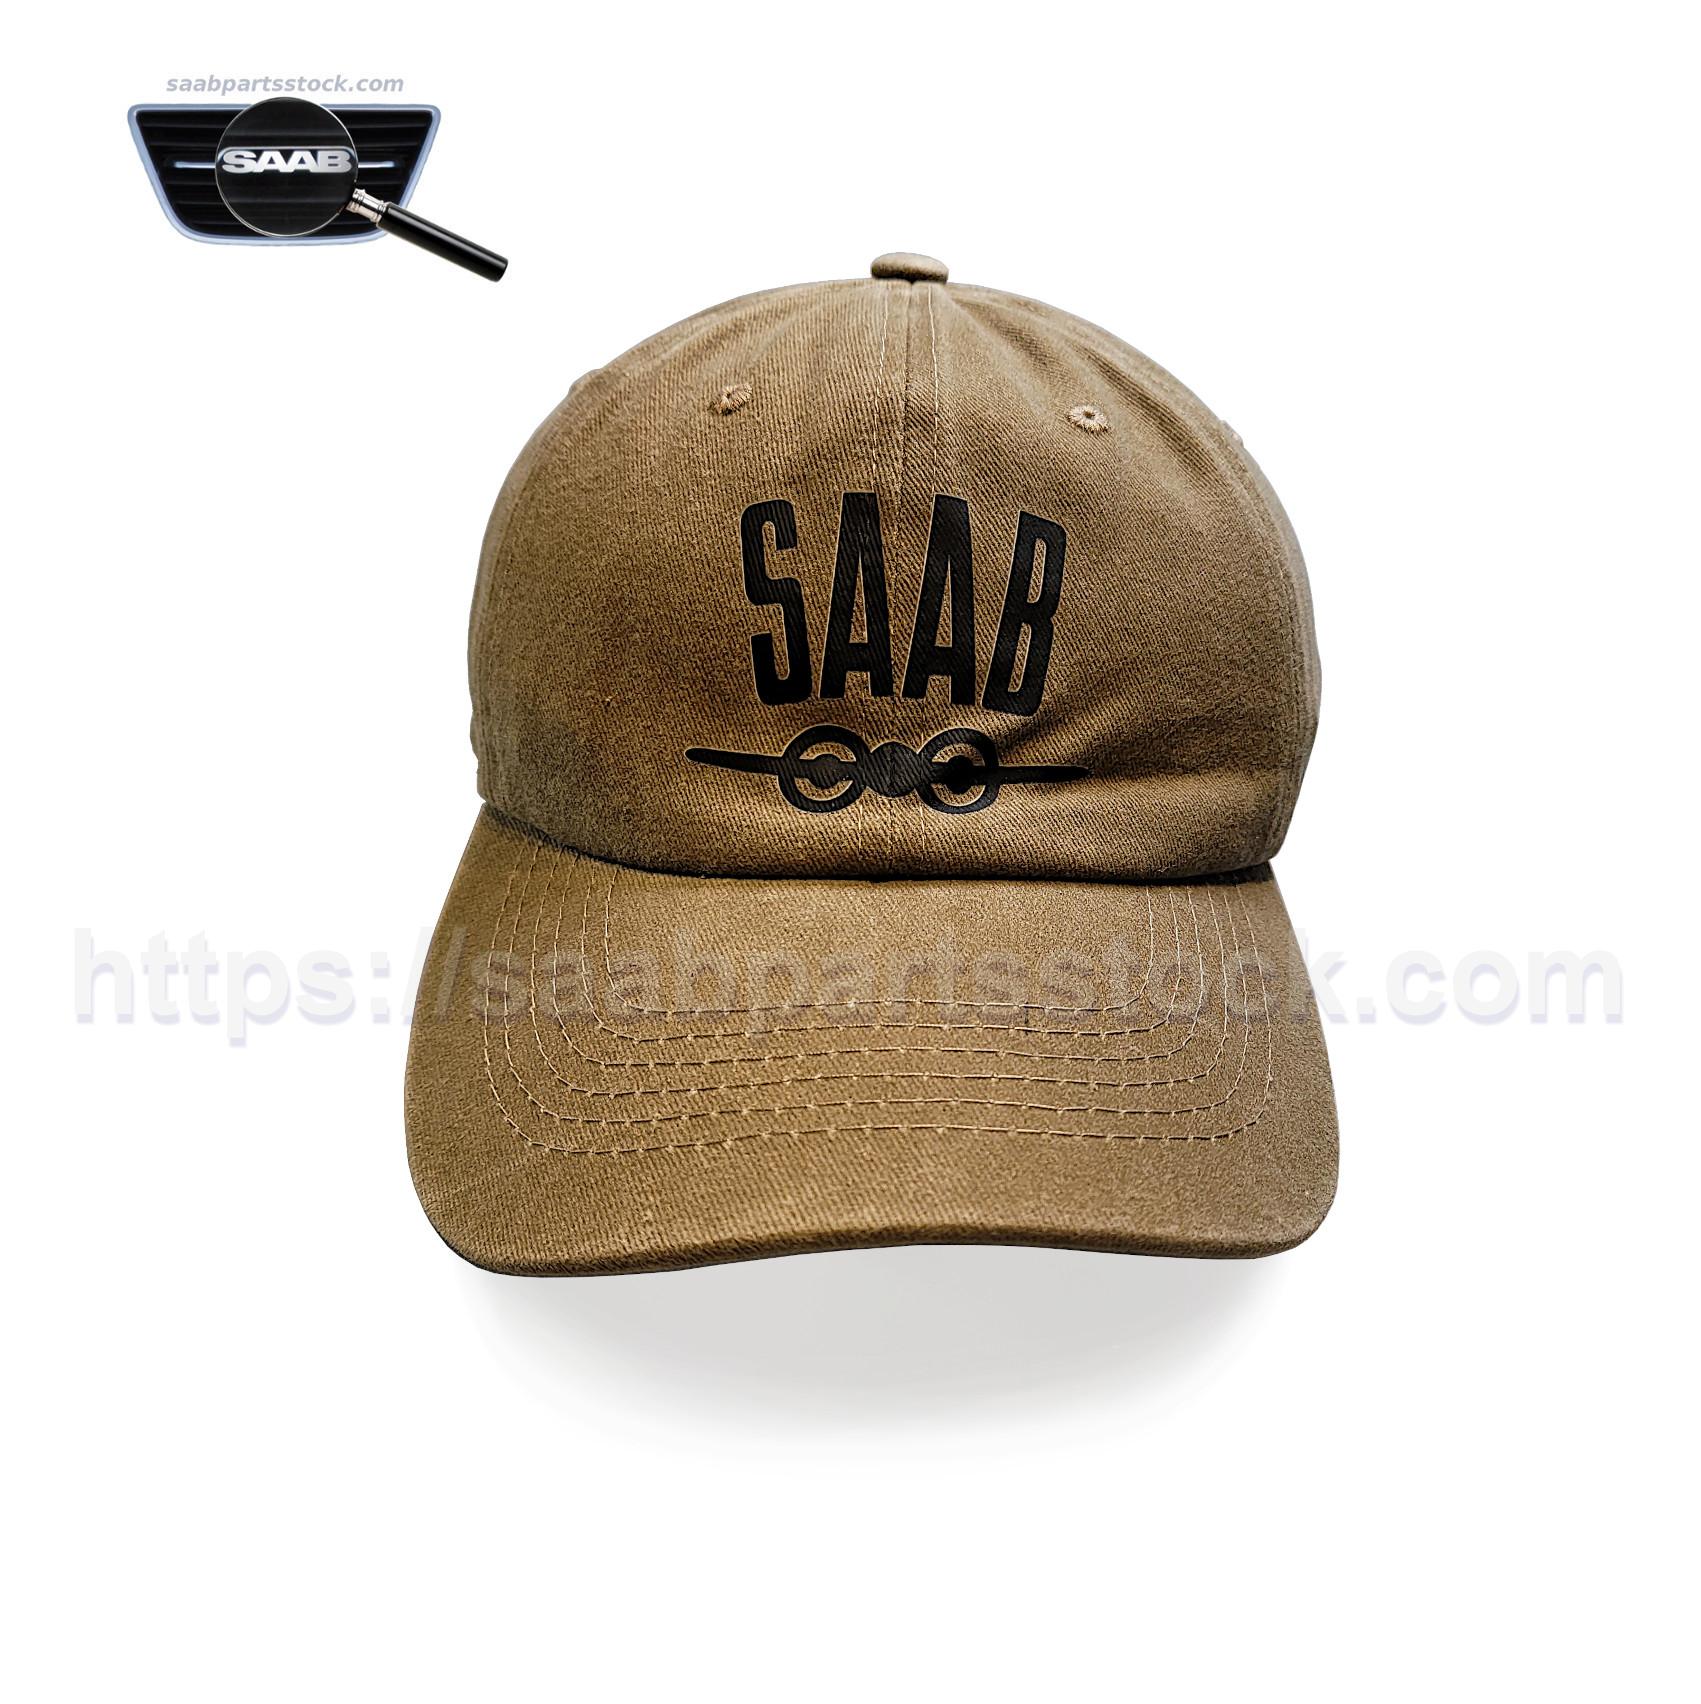 Baseball Cap With Retro SAAB logo, Khaki